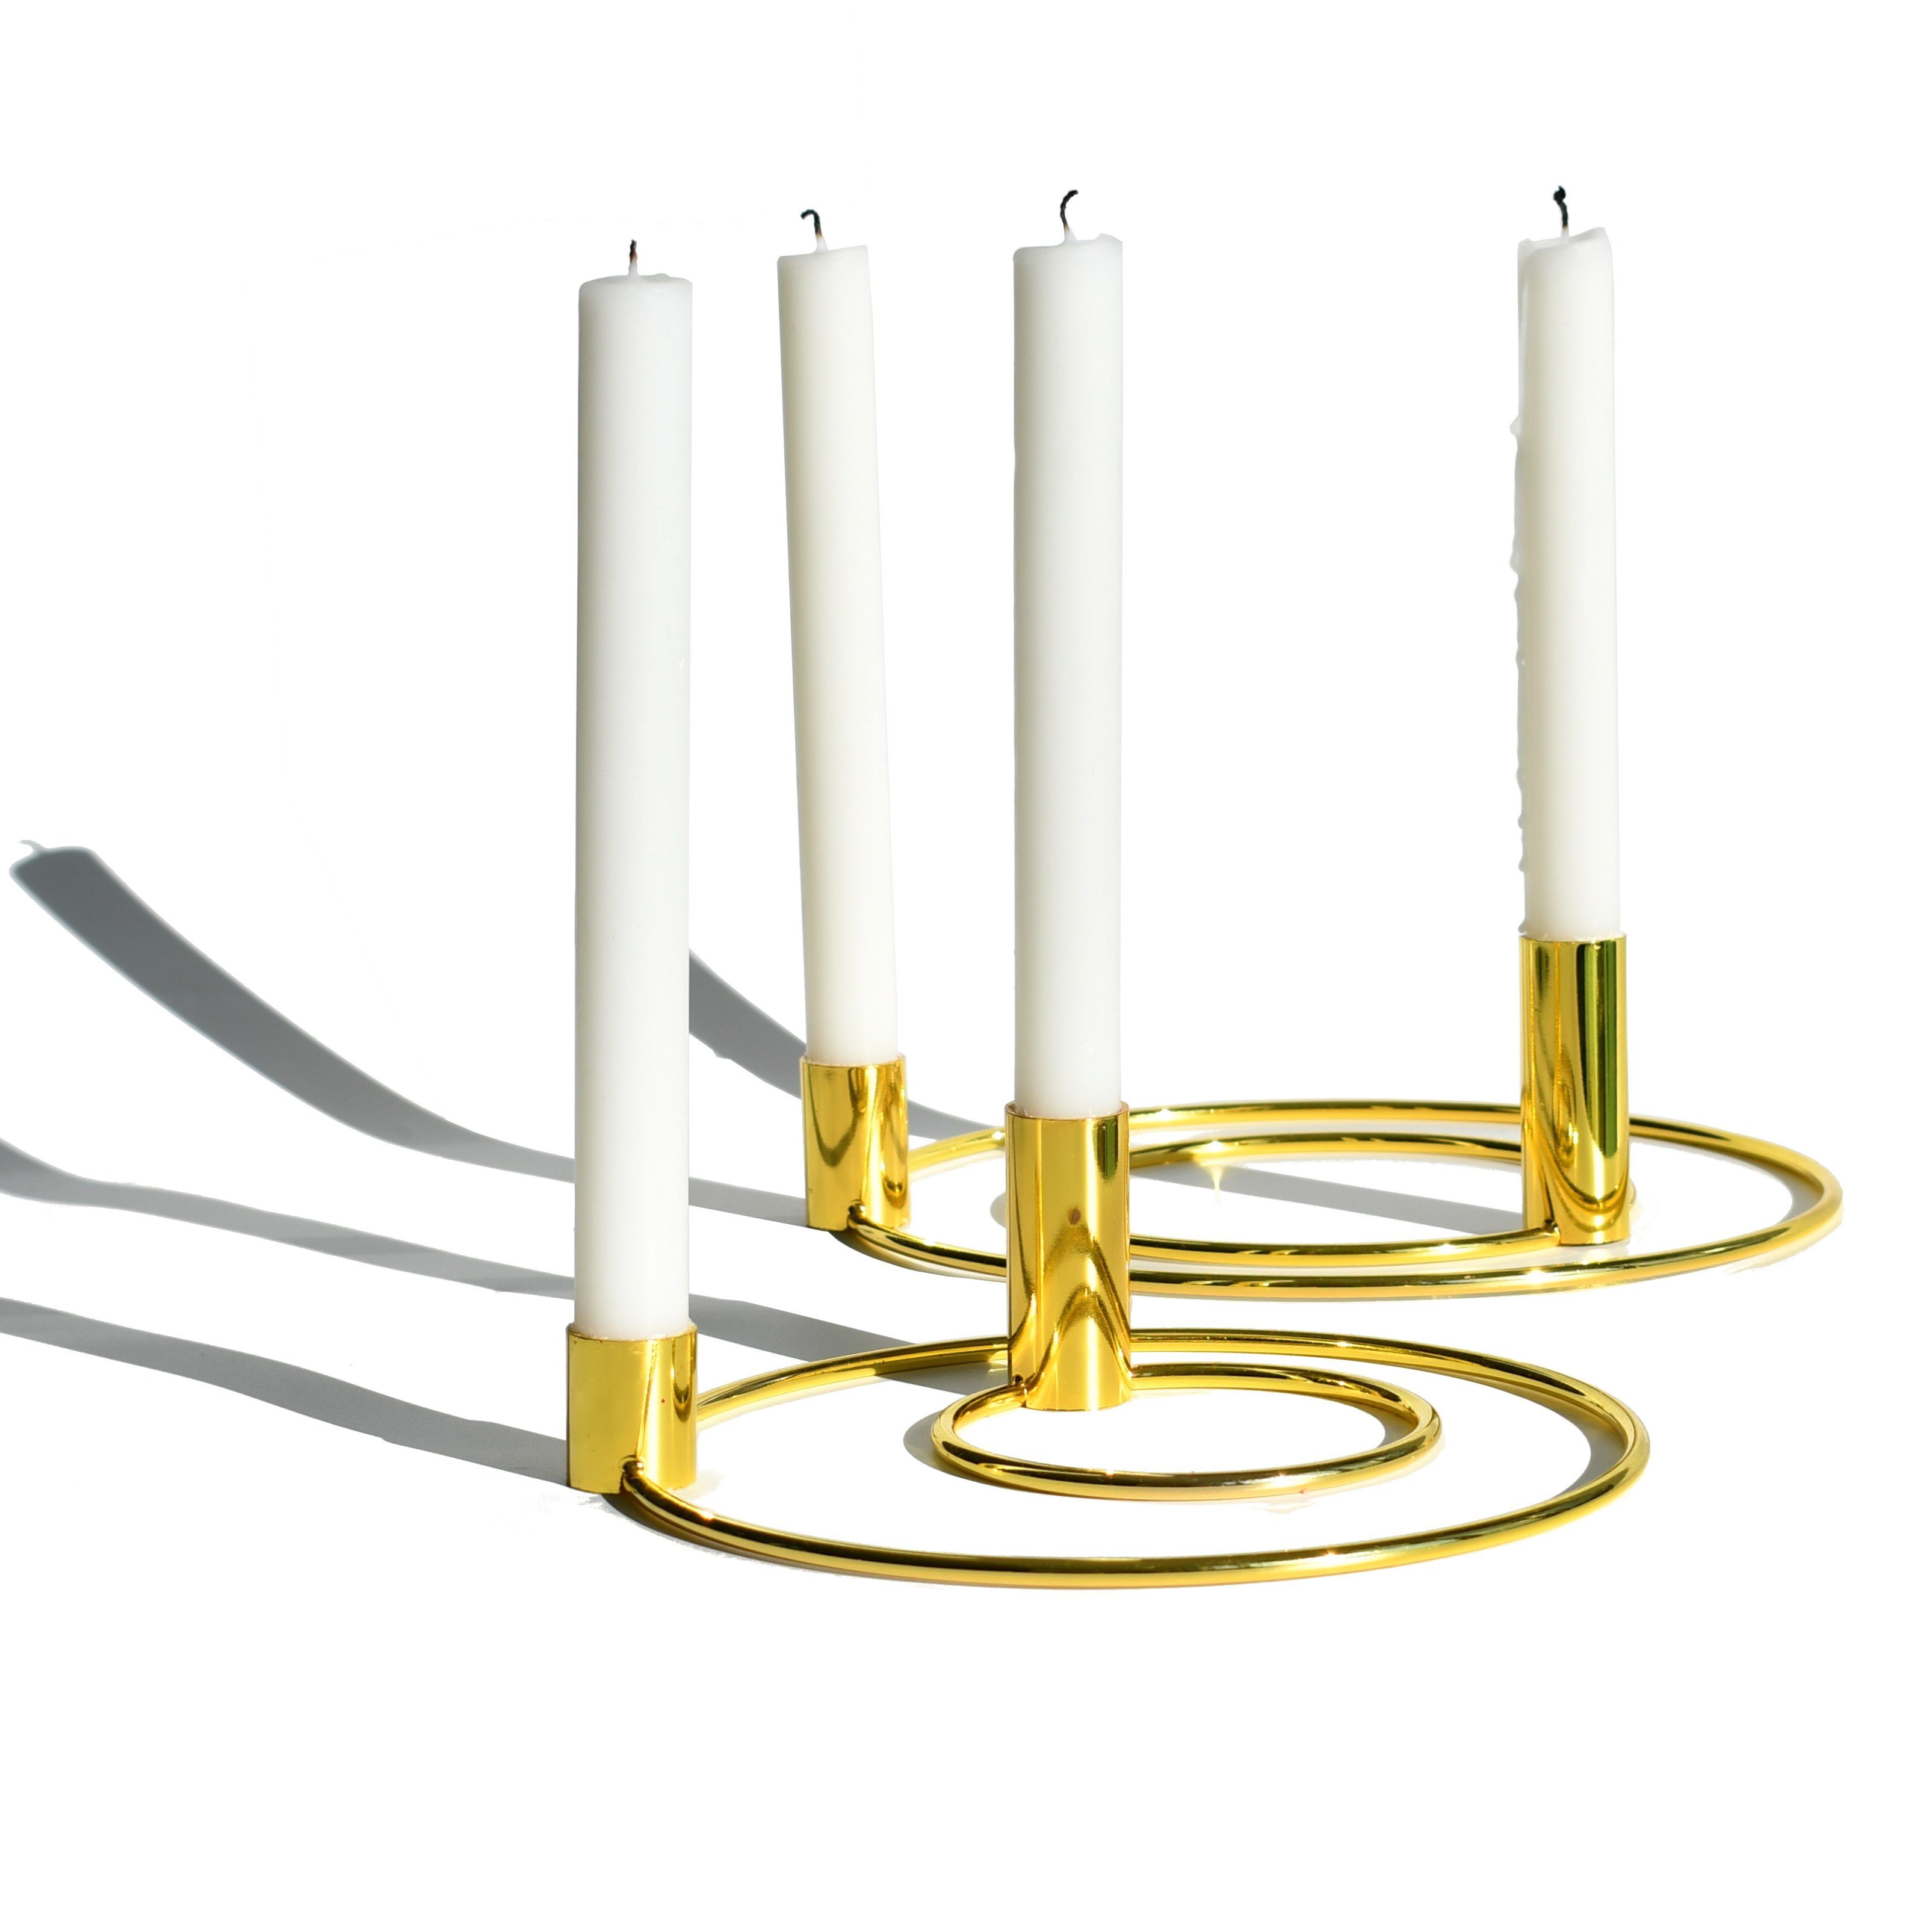 Kerzenhalter elegante poliert, St), Kerzenhalter Kreise Chilli Design Kerzen vier verschiedene Goldfarben, Gold, Edelstahl, Blue (4 4x inkl. in